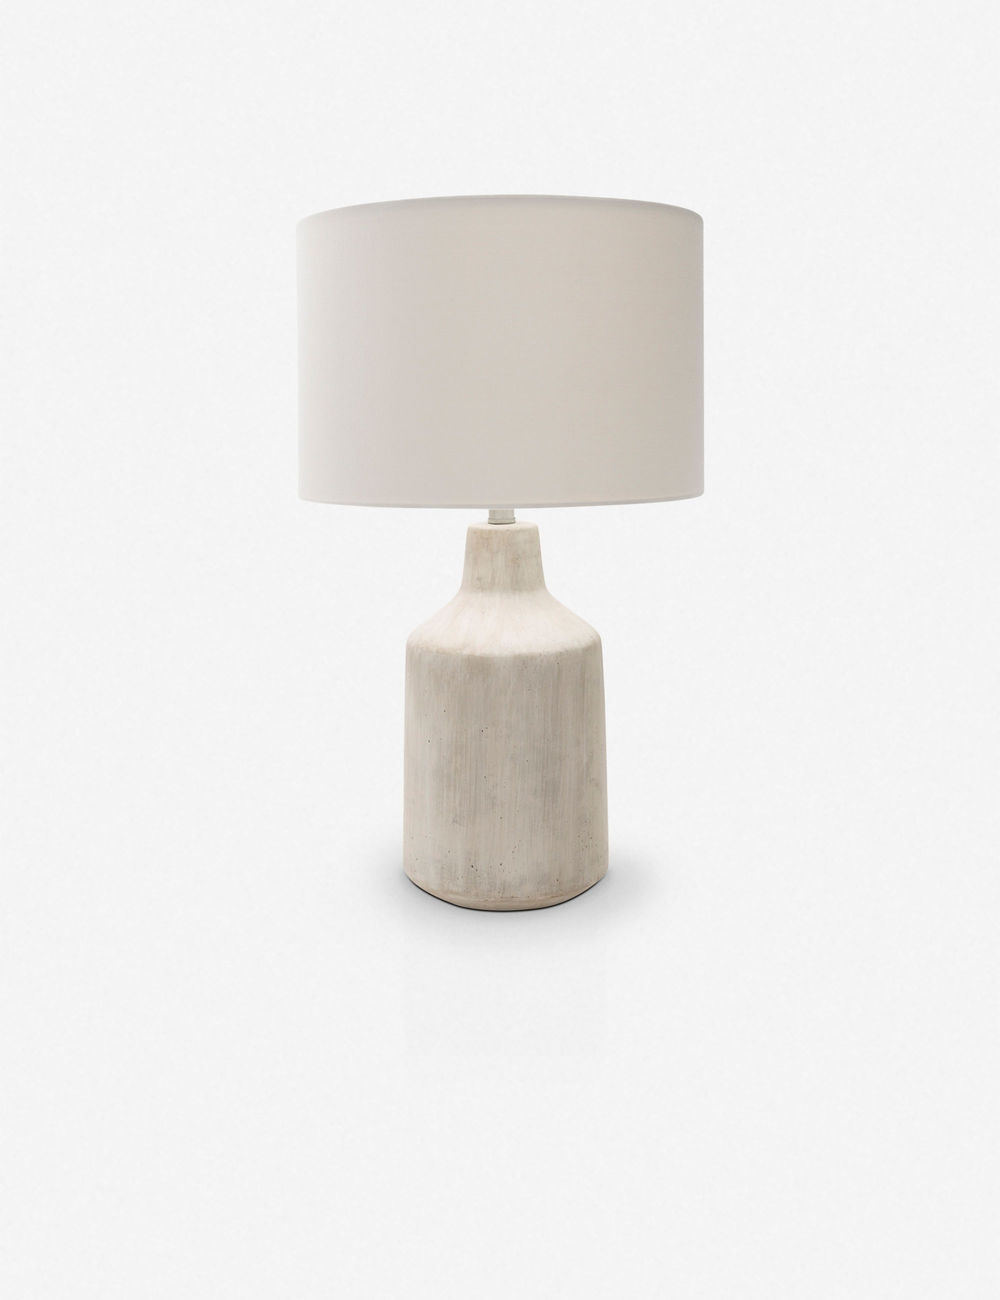 ORINE TABLE LAMP - Image 0